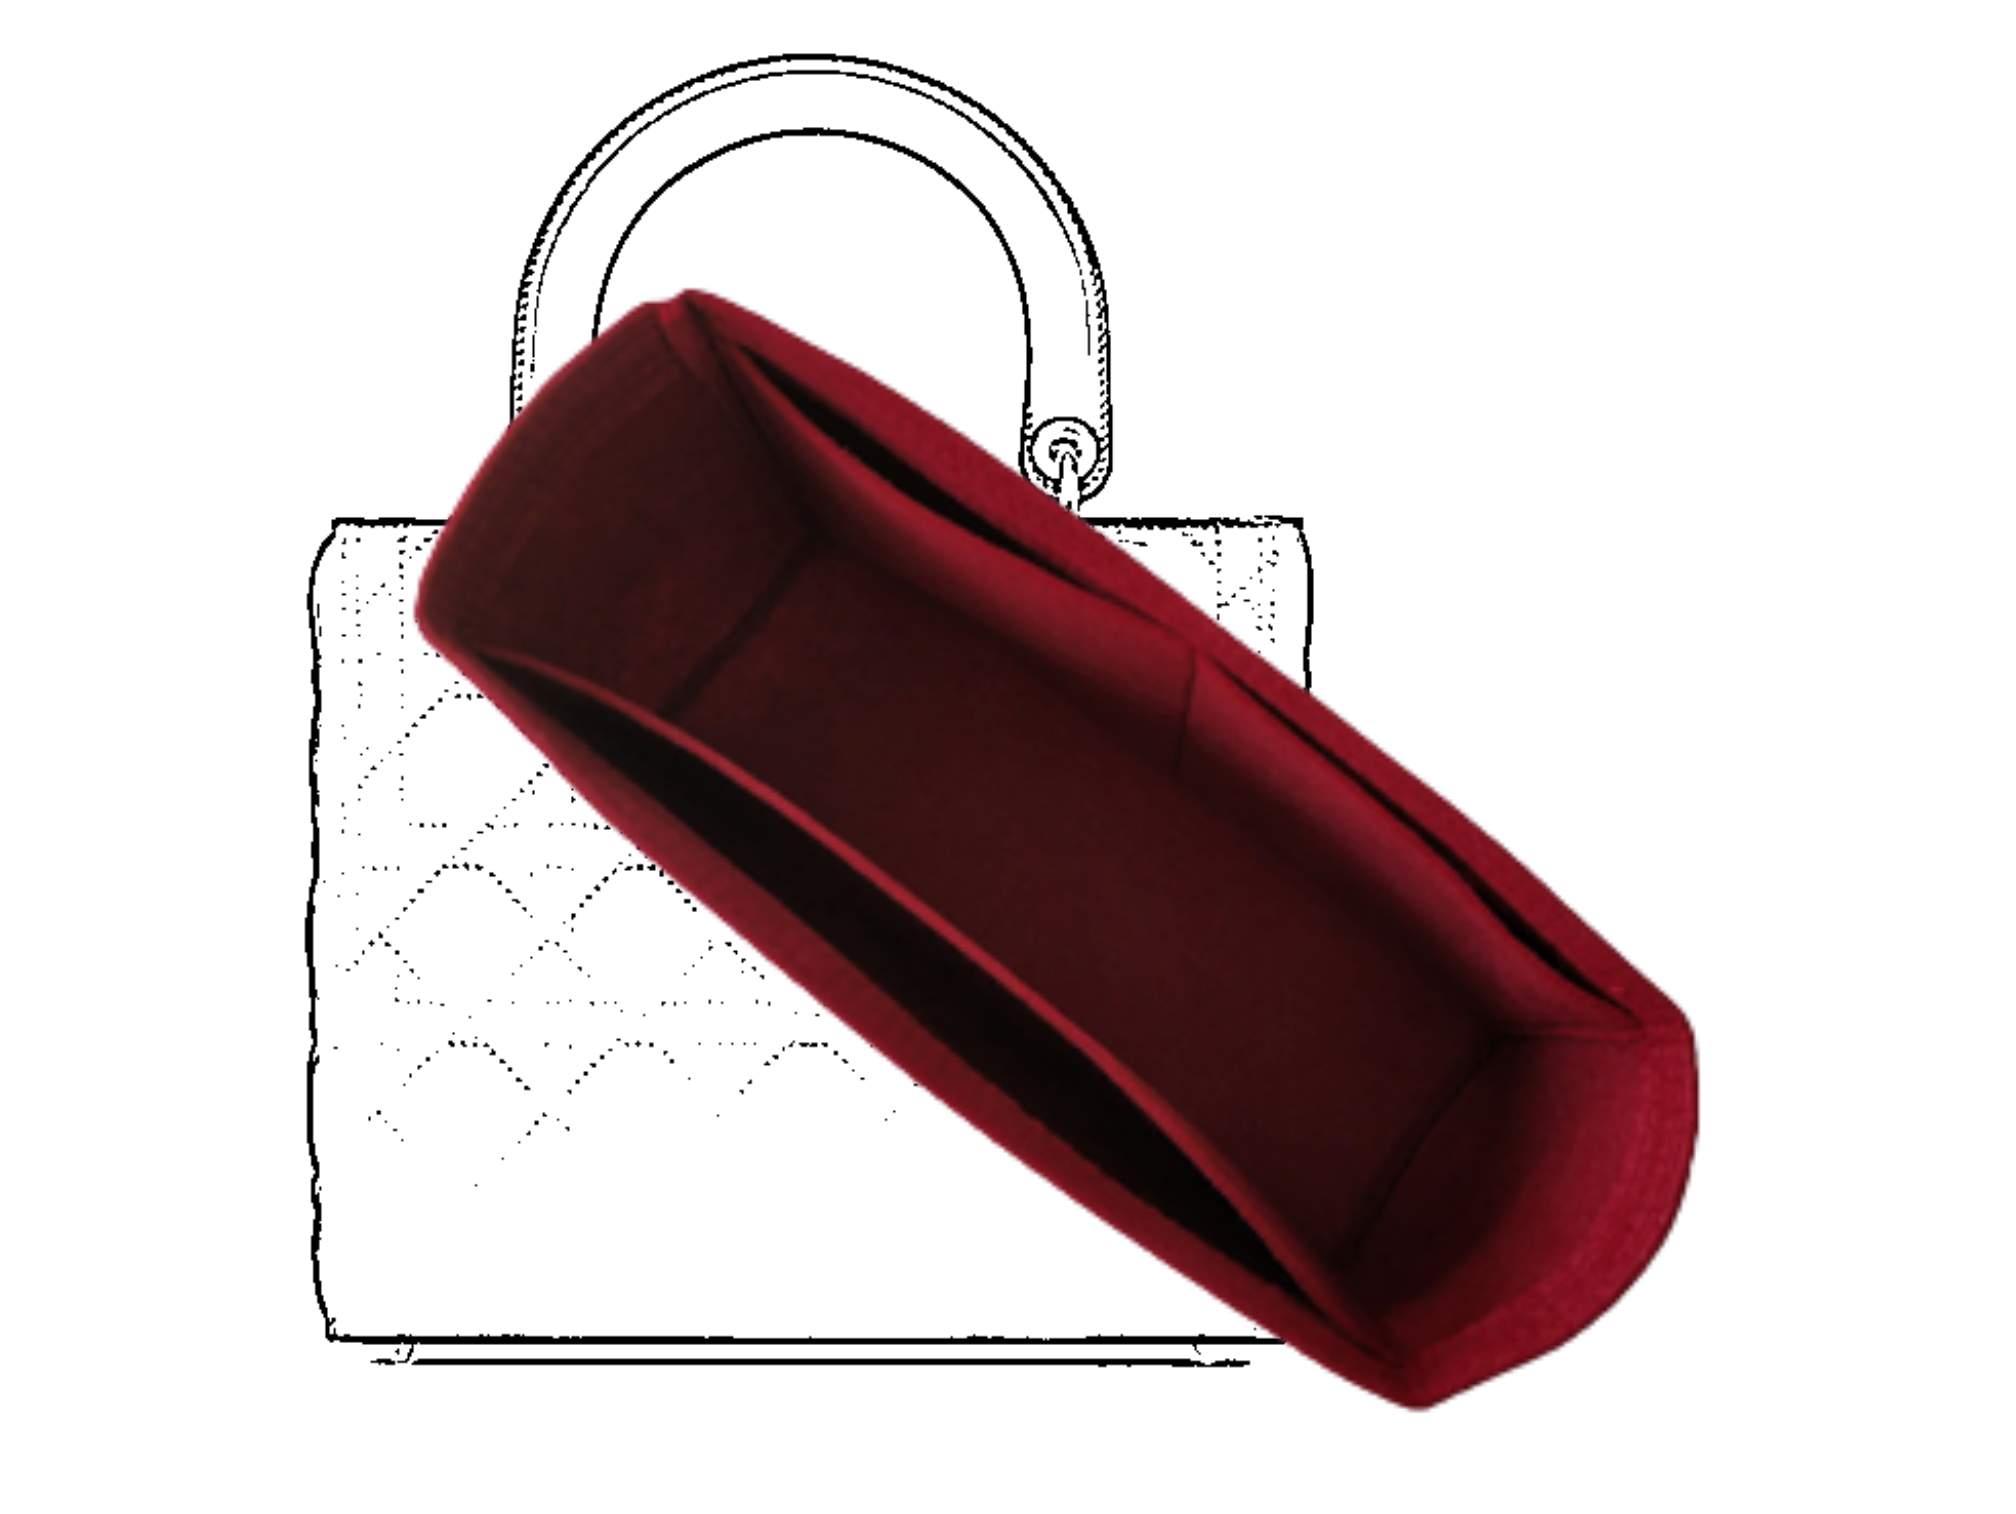 Preorder] Custom Made - Bag Insert/Bag Organiser/Bag Base/Bag Pillow for Moynat  Oh! Tote Ruban